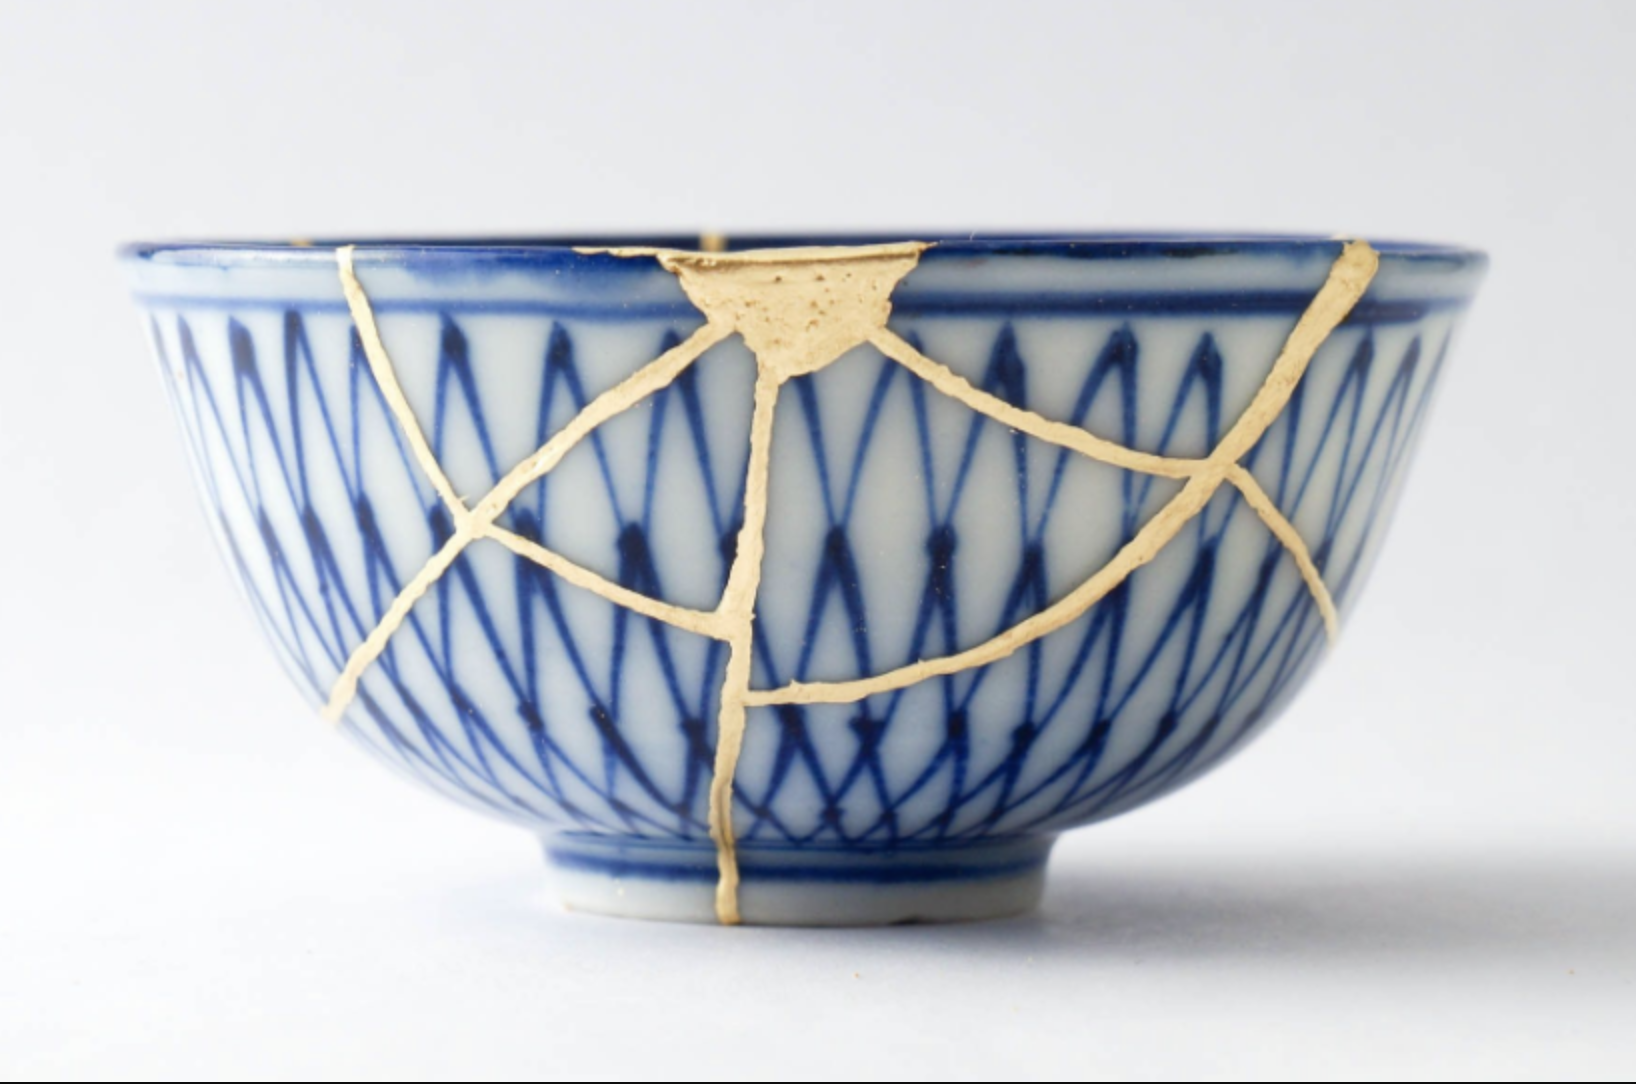 cup depicting a Japanese ceramic technique, Kintsugi